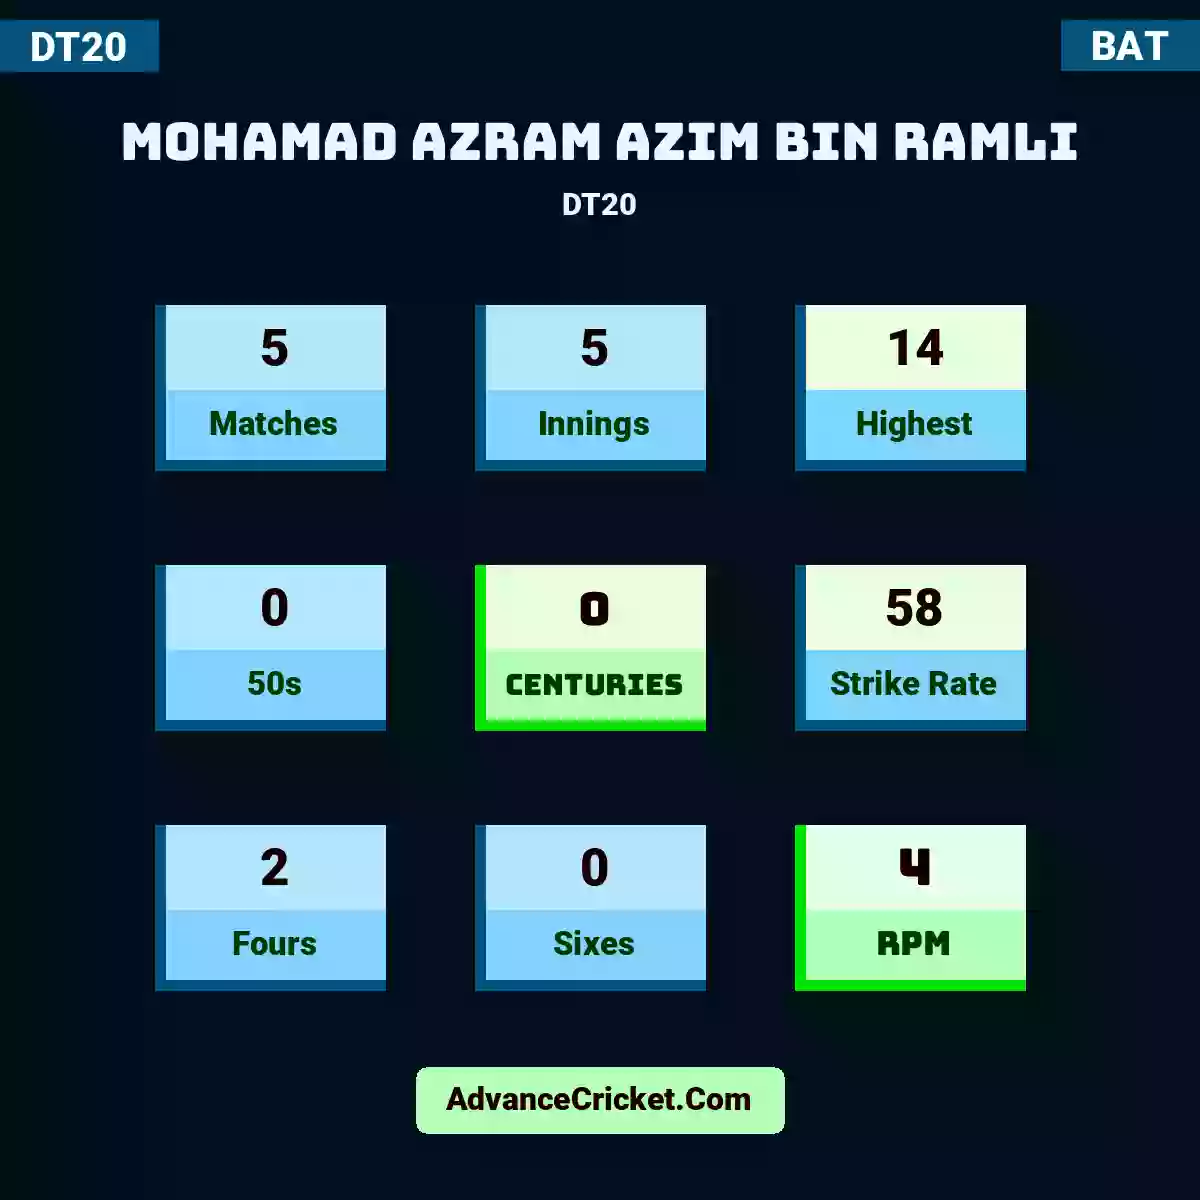 Mohamad Azram Azim Bin Ramli DT20 , Mohamad Azram Azim Bin Ramli played 5 matches, scored 14 runs as highest, 0 half-centuries, and 0 centuries, with a strike rate of 58. M.Azram.Azim.Bin.Ramli hit 2 fours and 0 sixes, with an RPM of 4.